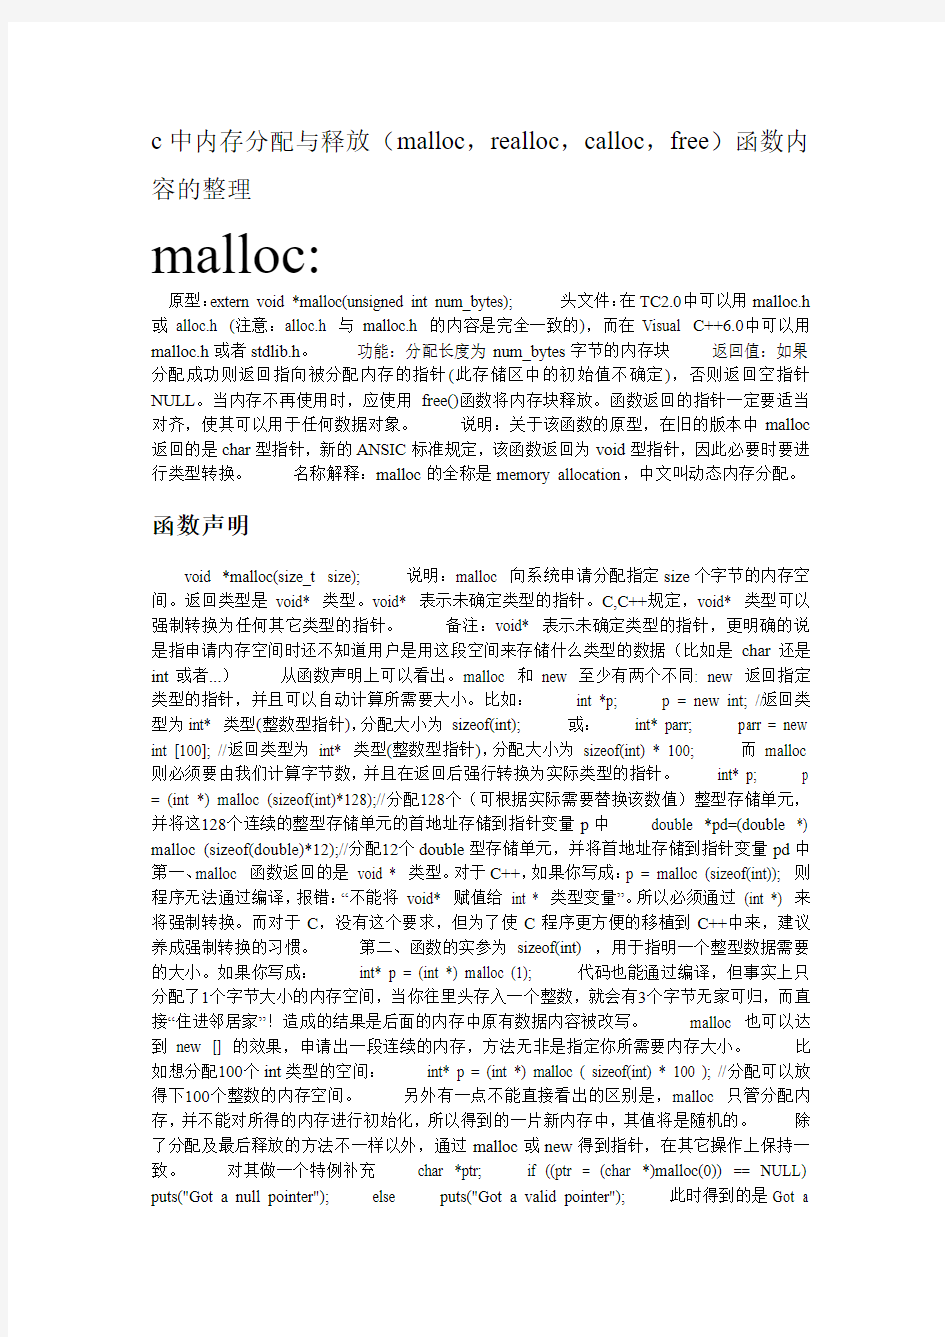 c中内存分配与释放(malloc,realloc,calloc,free)函数内容的整理